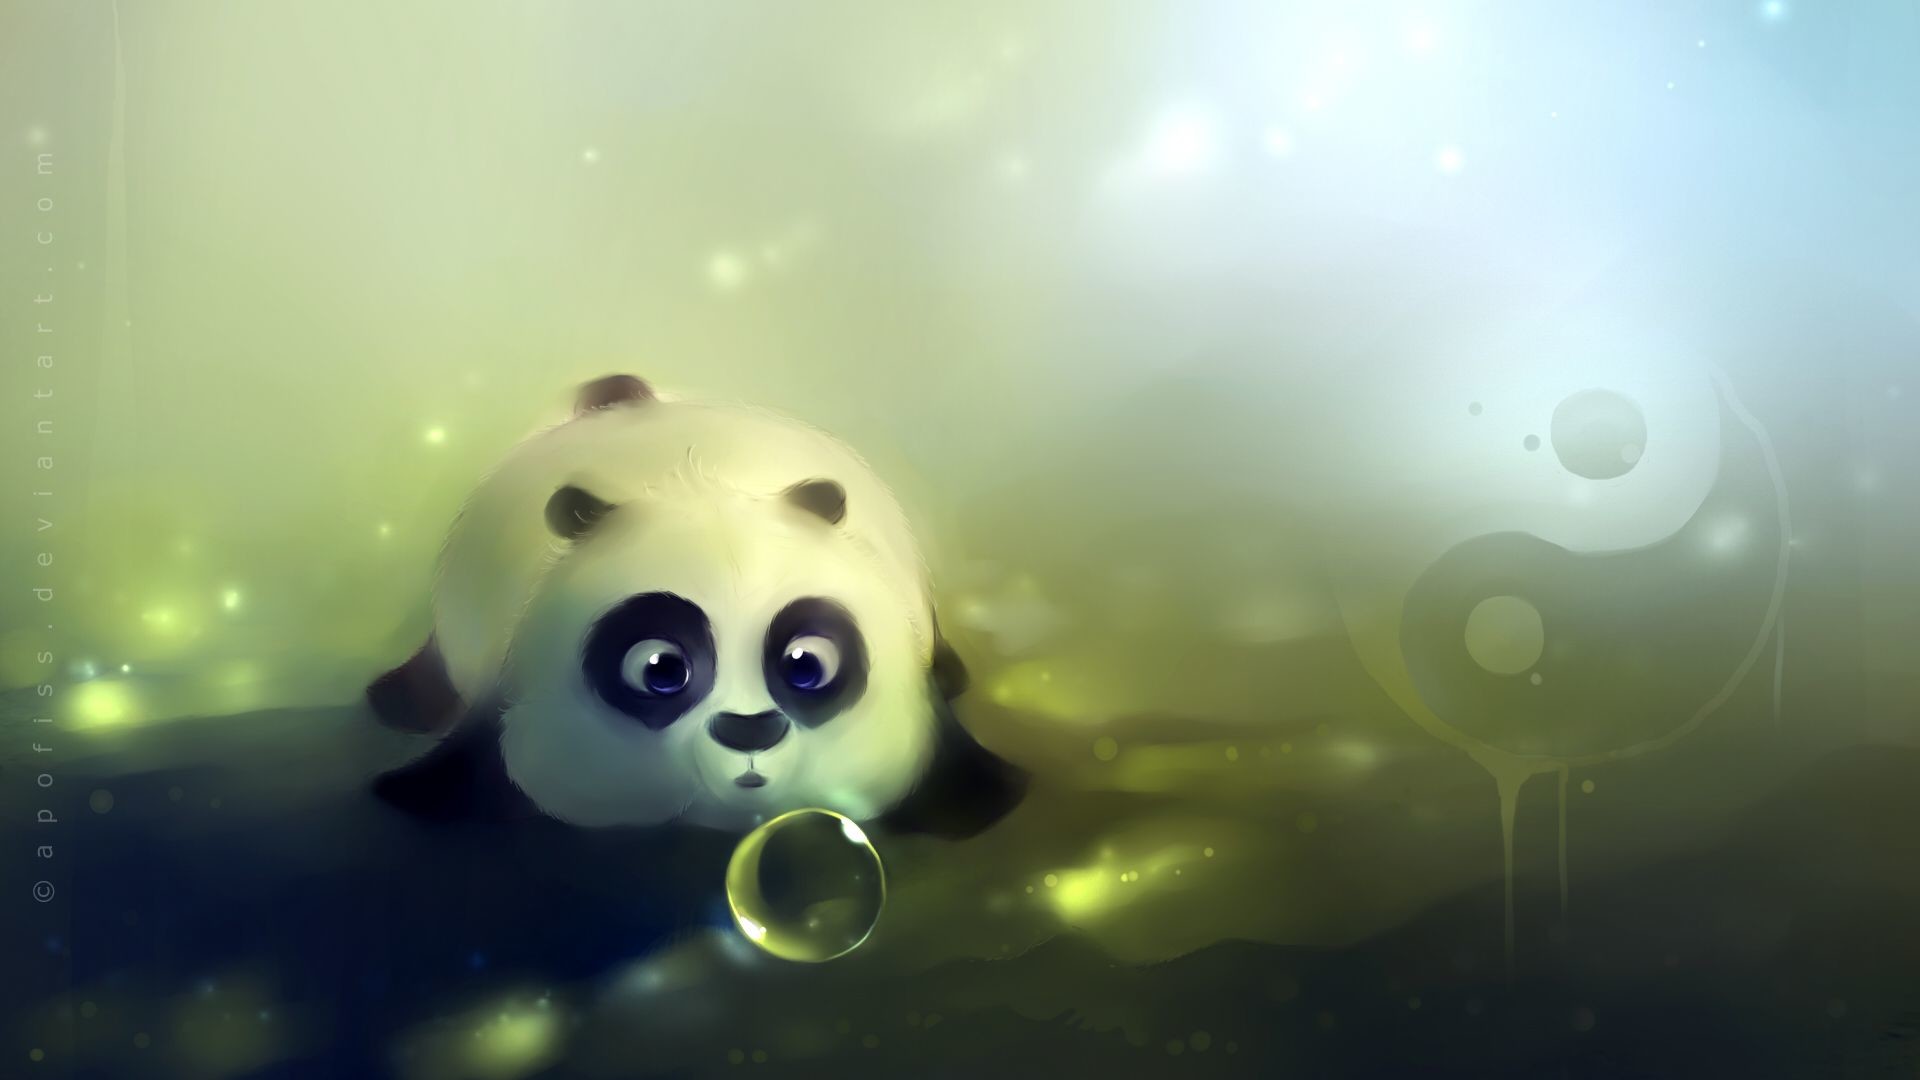 Cute panda wallpapers pictures